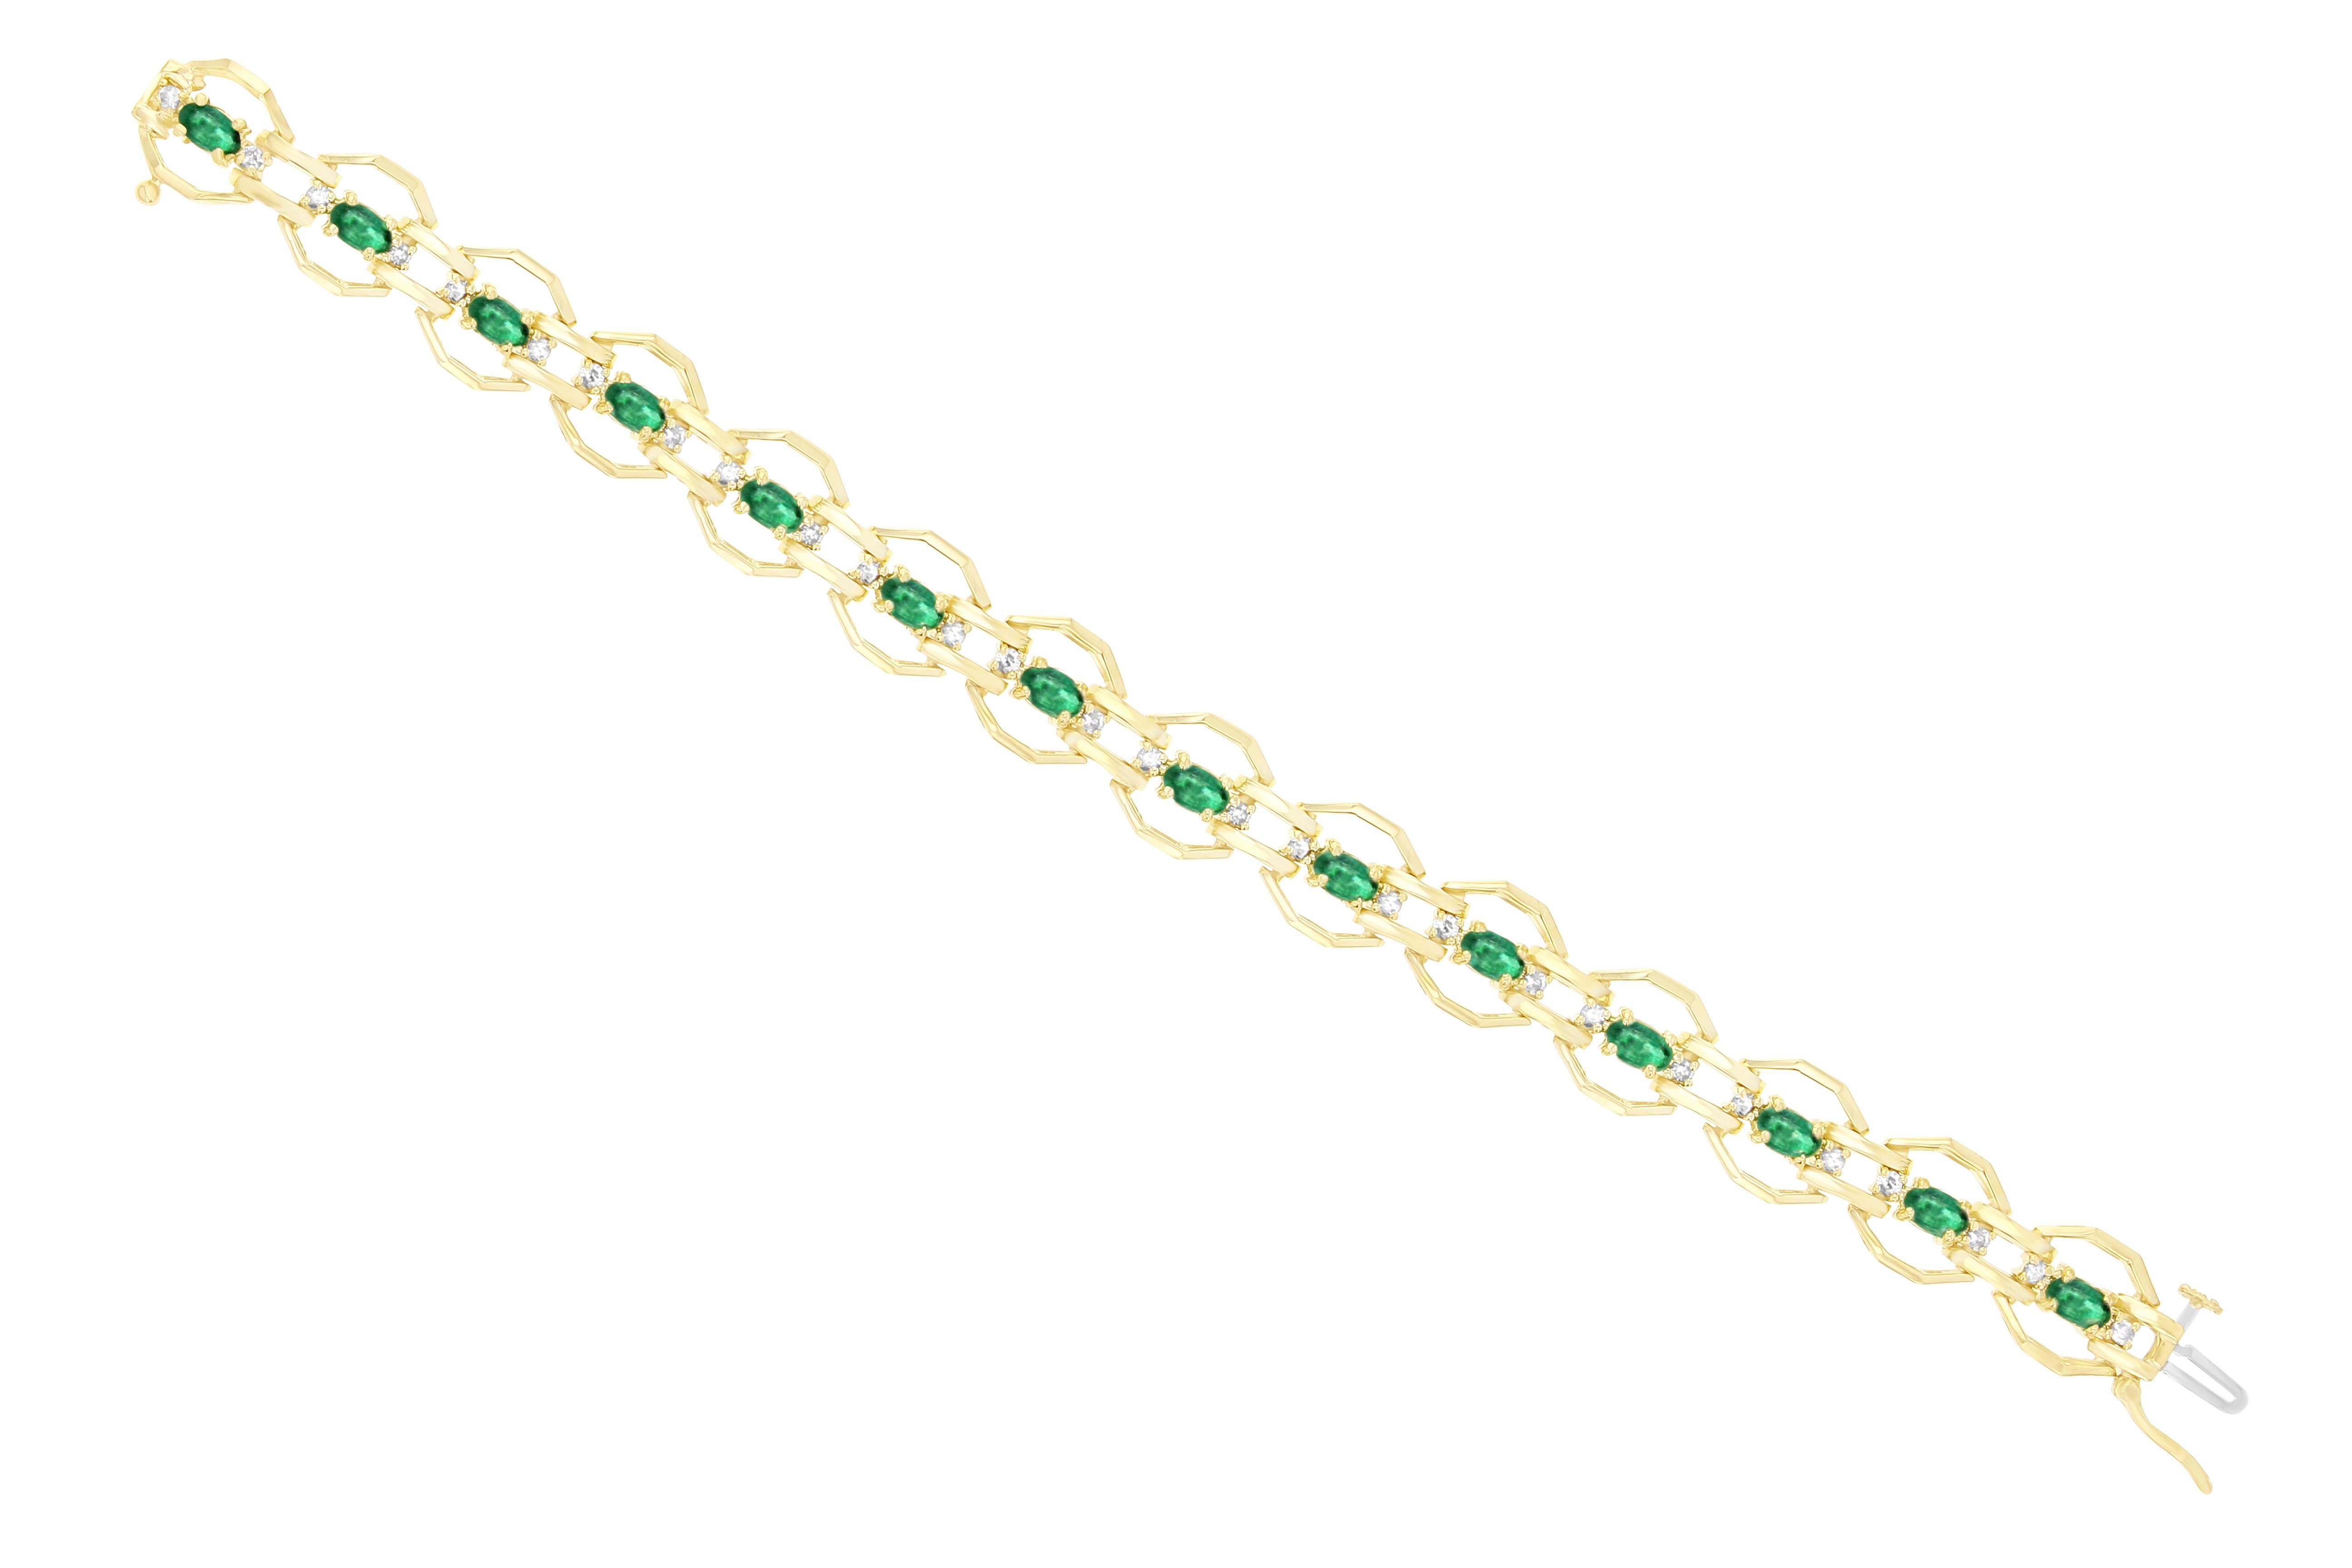 ♥ Tennis Bracelet Description ♥

Main Stone: Diamond & Emeralds 
Approx. Diamond Total Carat: 4.25cttw
Diamond Color: H
Diamond Clarity: SI1
Metal Type: 14K Yellow Gold
Stone Cut: Oval & Round
Metal Weight: 22 grams
Bracelet Length: 7